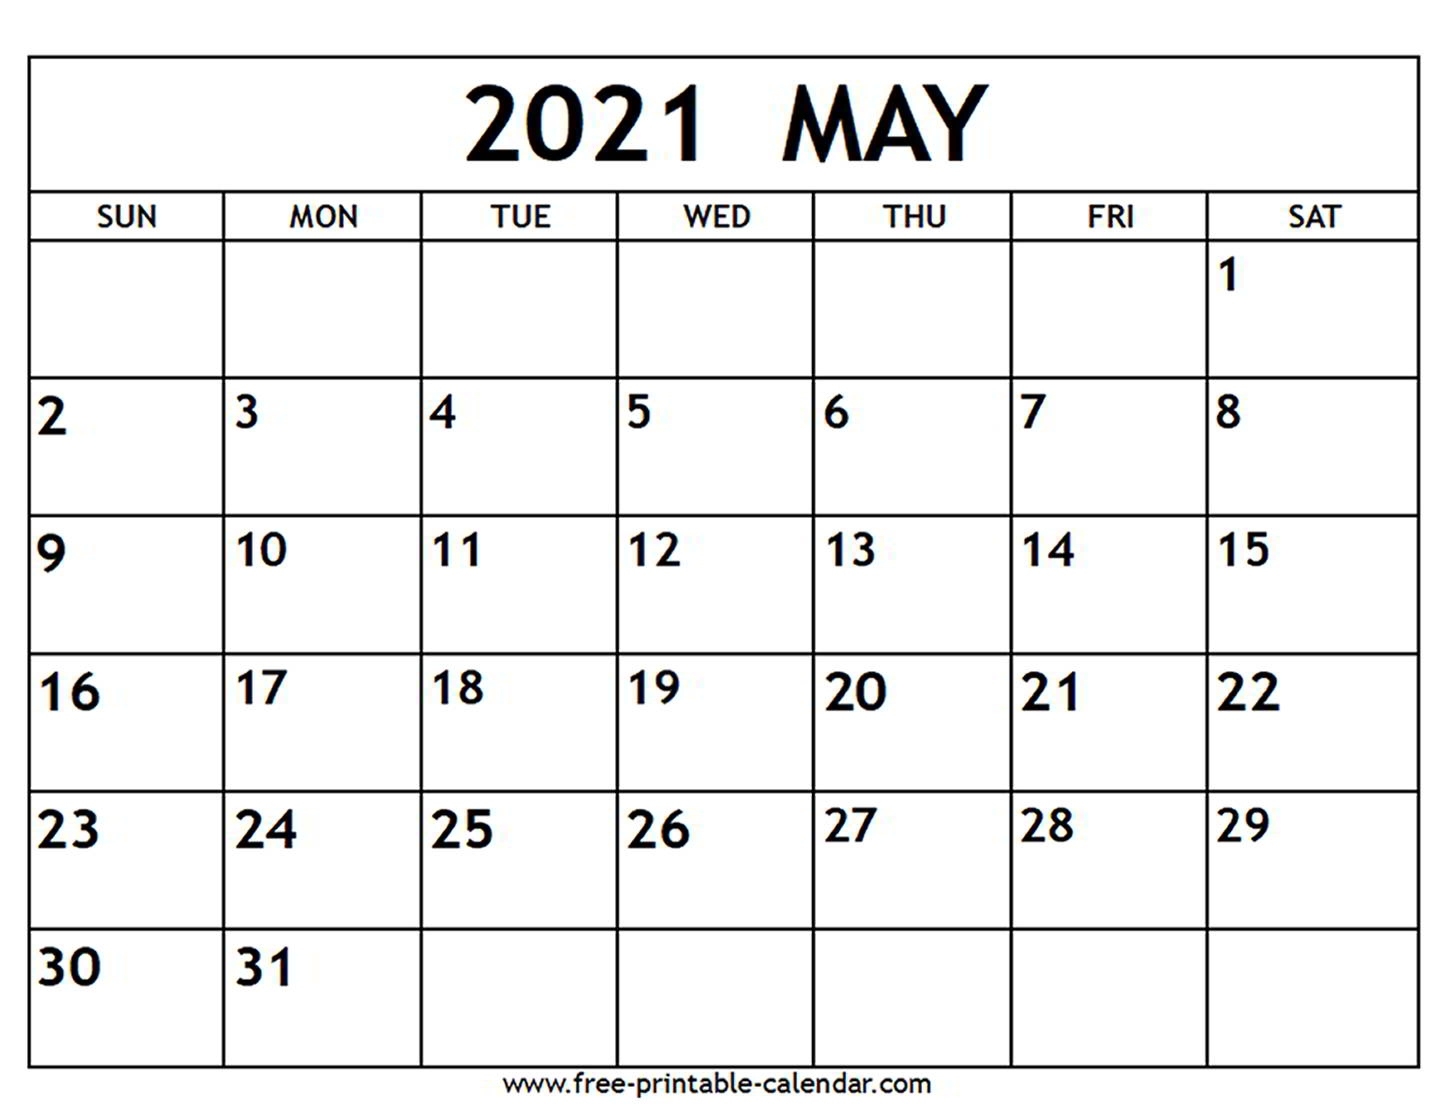 May 2021 Calendar - Free-Printable-Calendar May-July 2021 Calendar